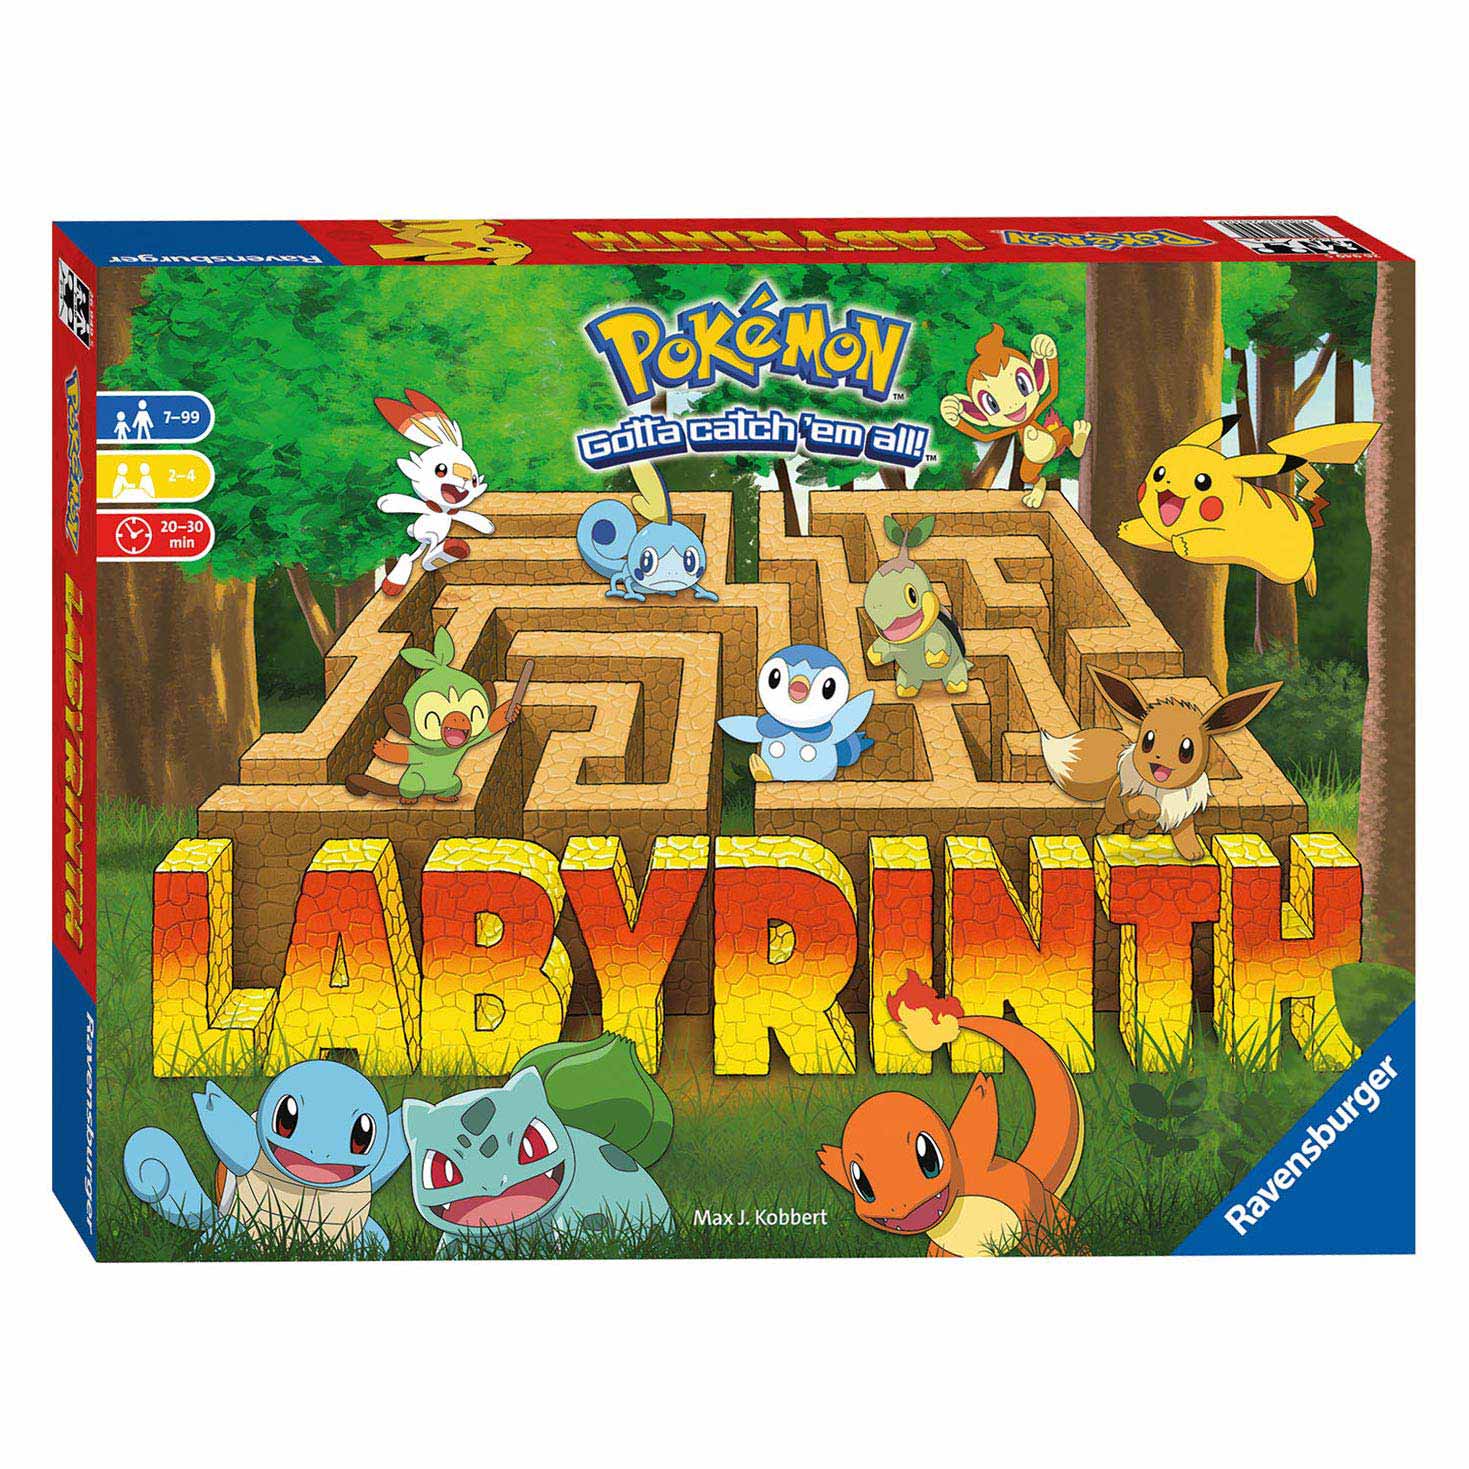 Labyrinth Pokemon (Doolhof)